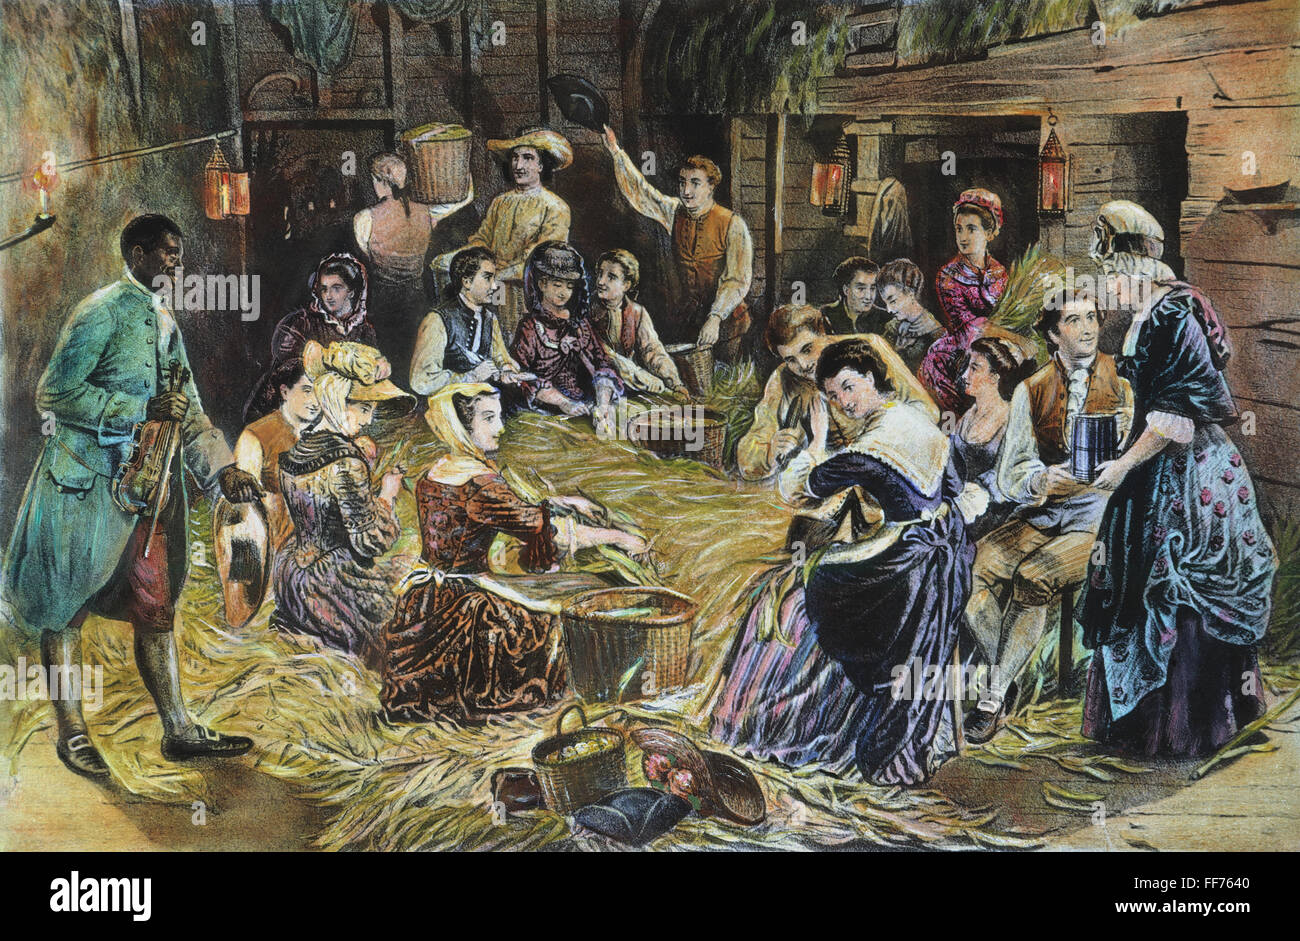 HUSKING BEE /nin aus dem 18. Jahrhundert Kolonialamerika. Lithographie, 19. Jahrhundert. Stockfoto